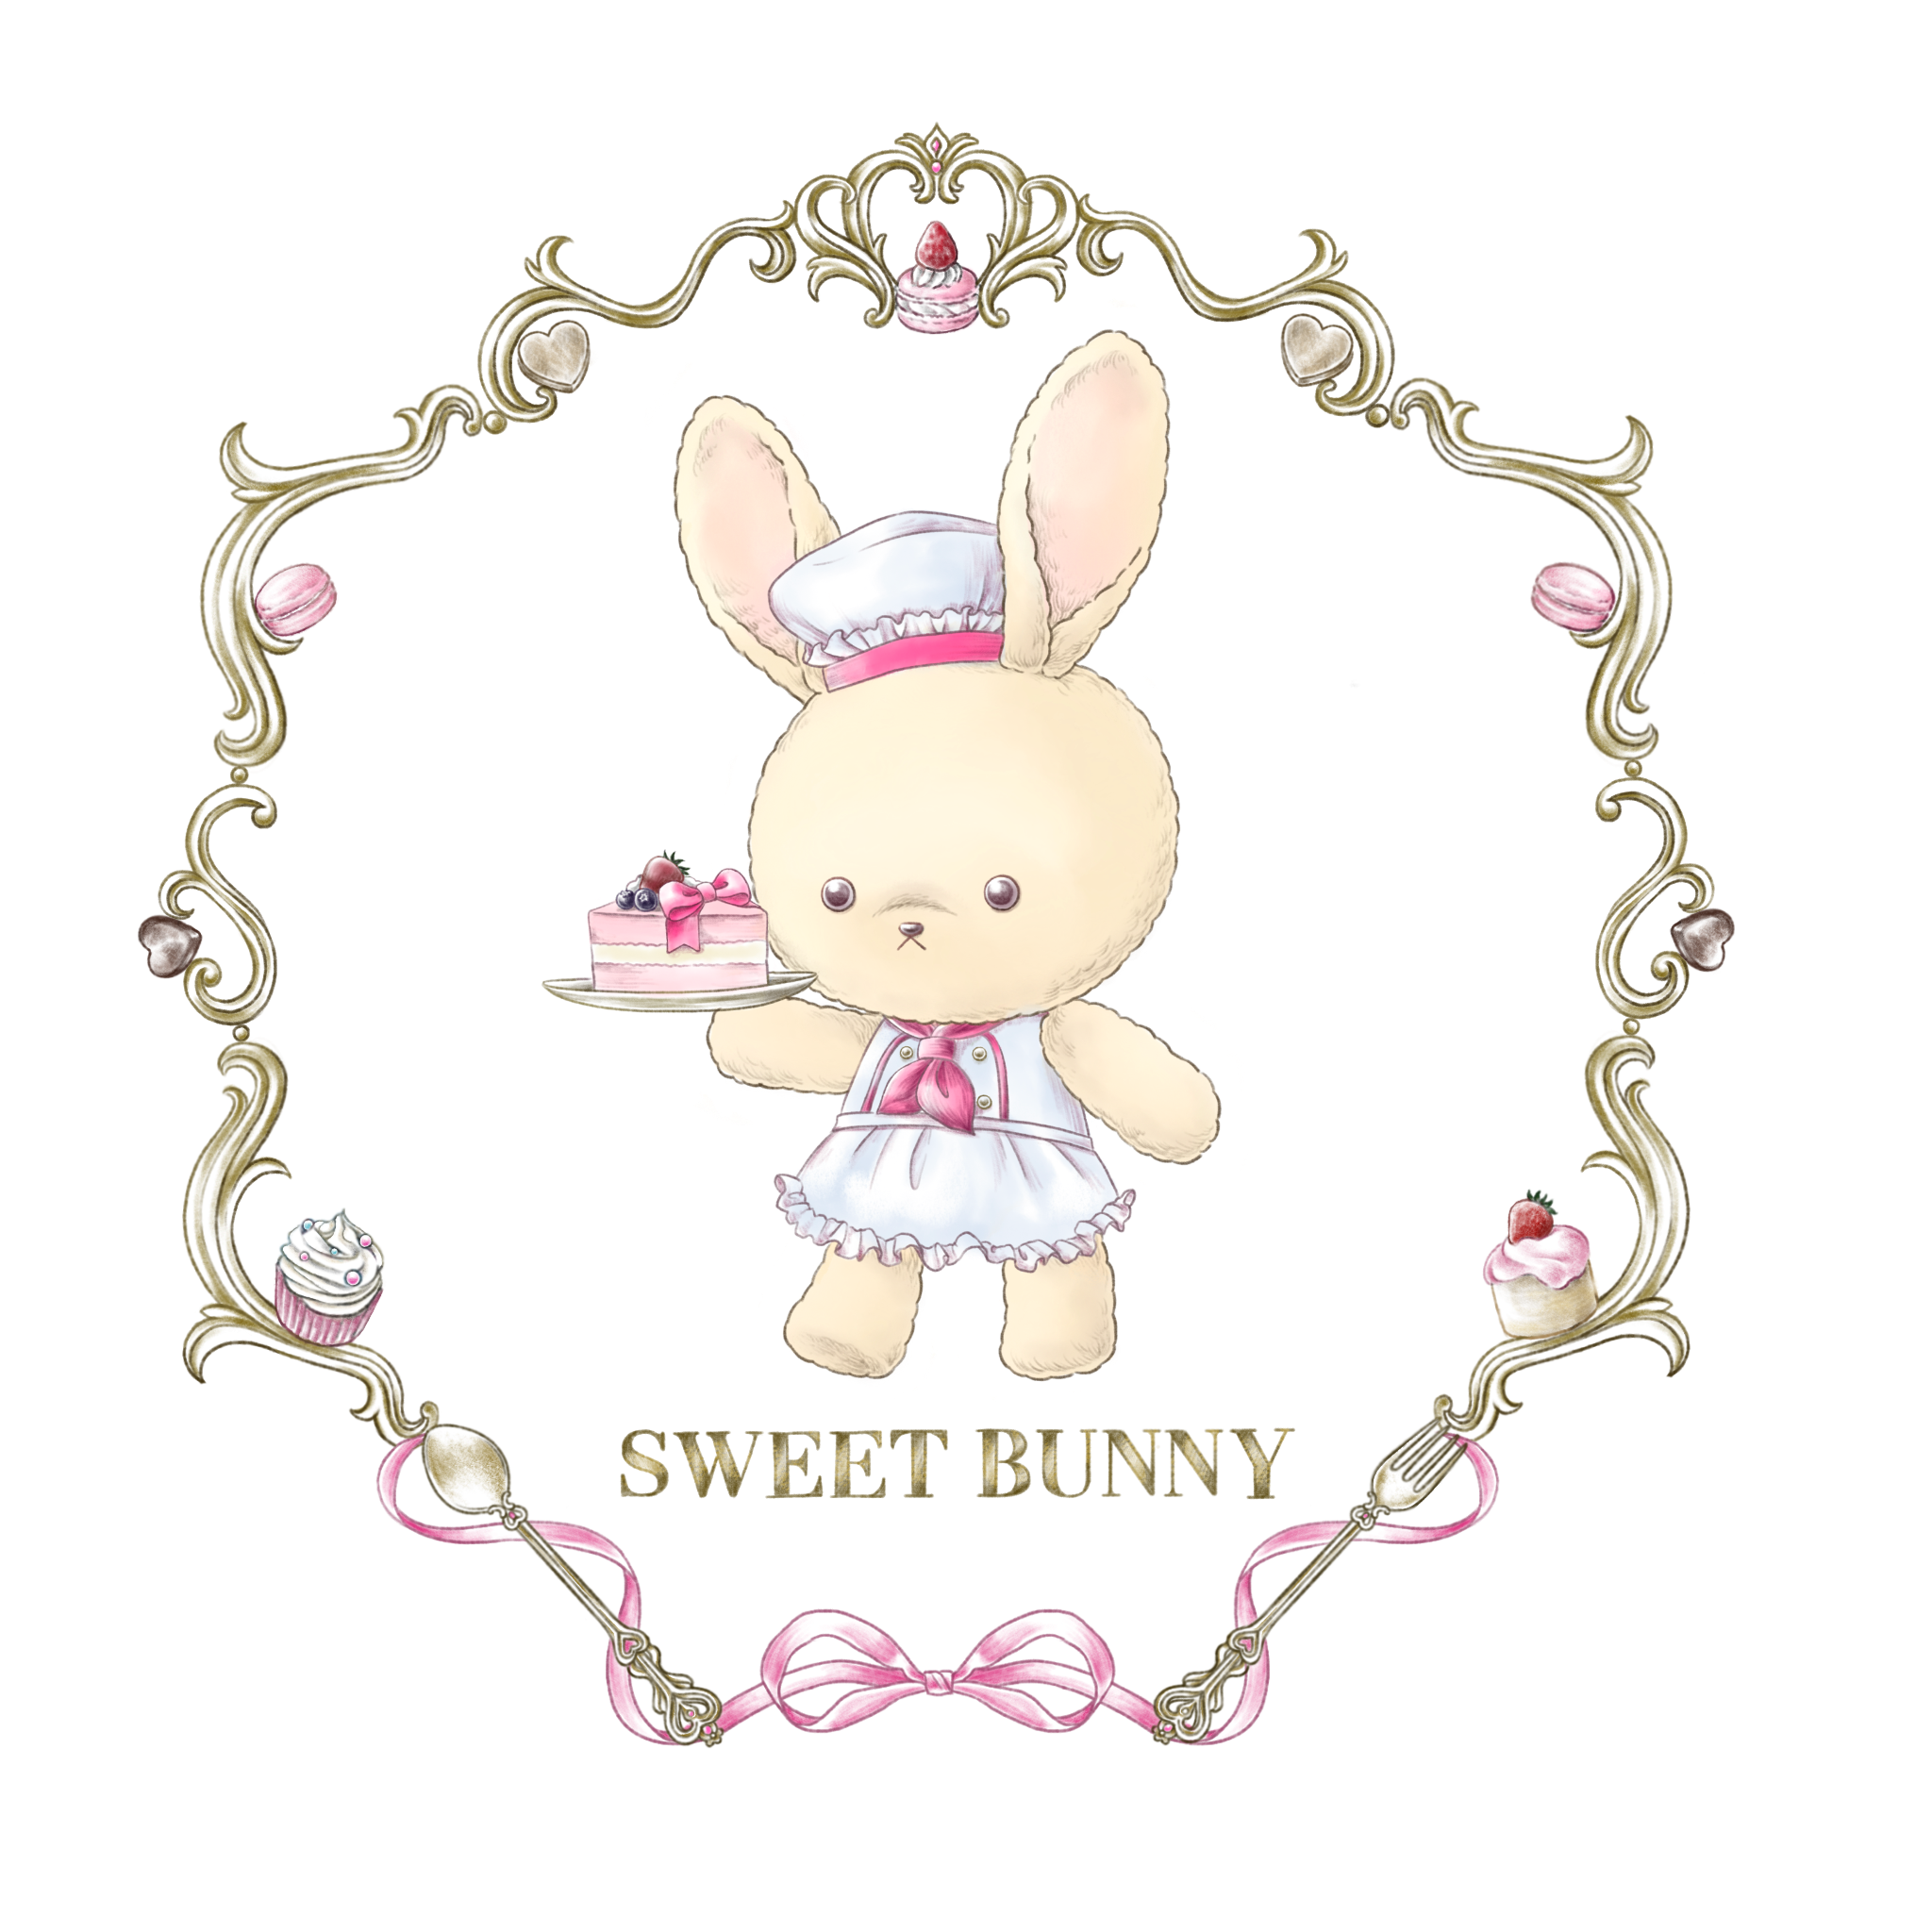 sweetbunny12